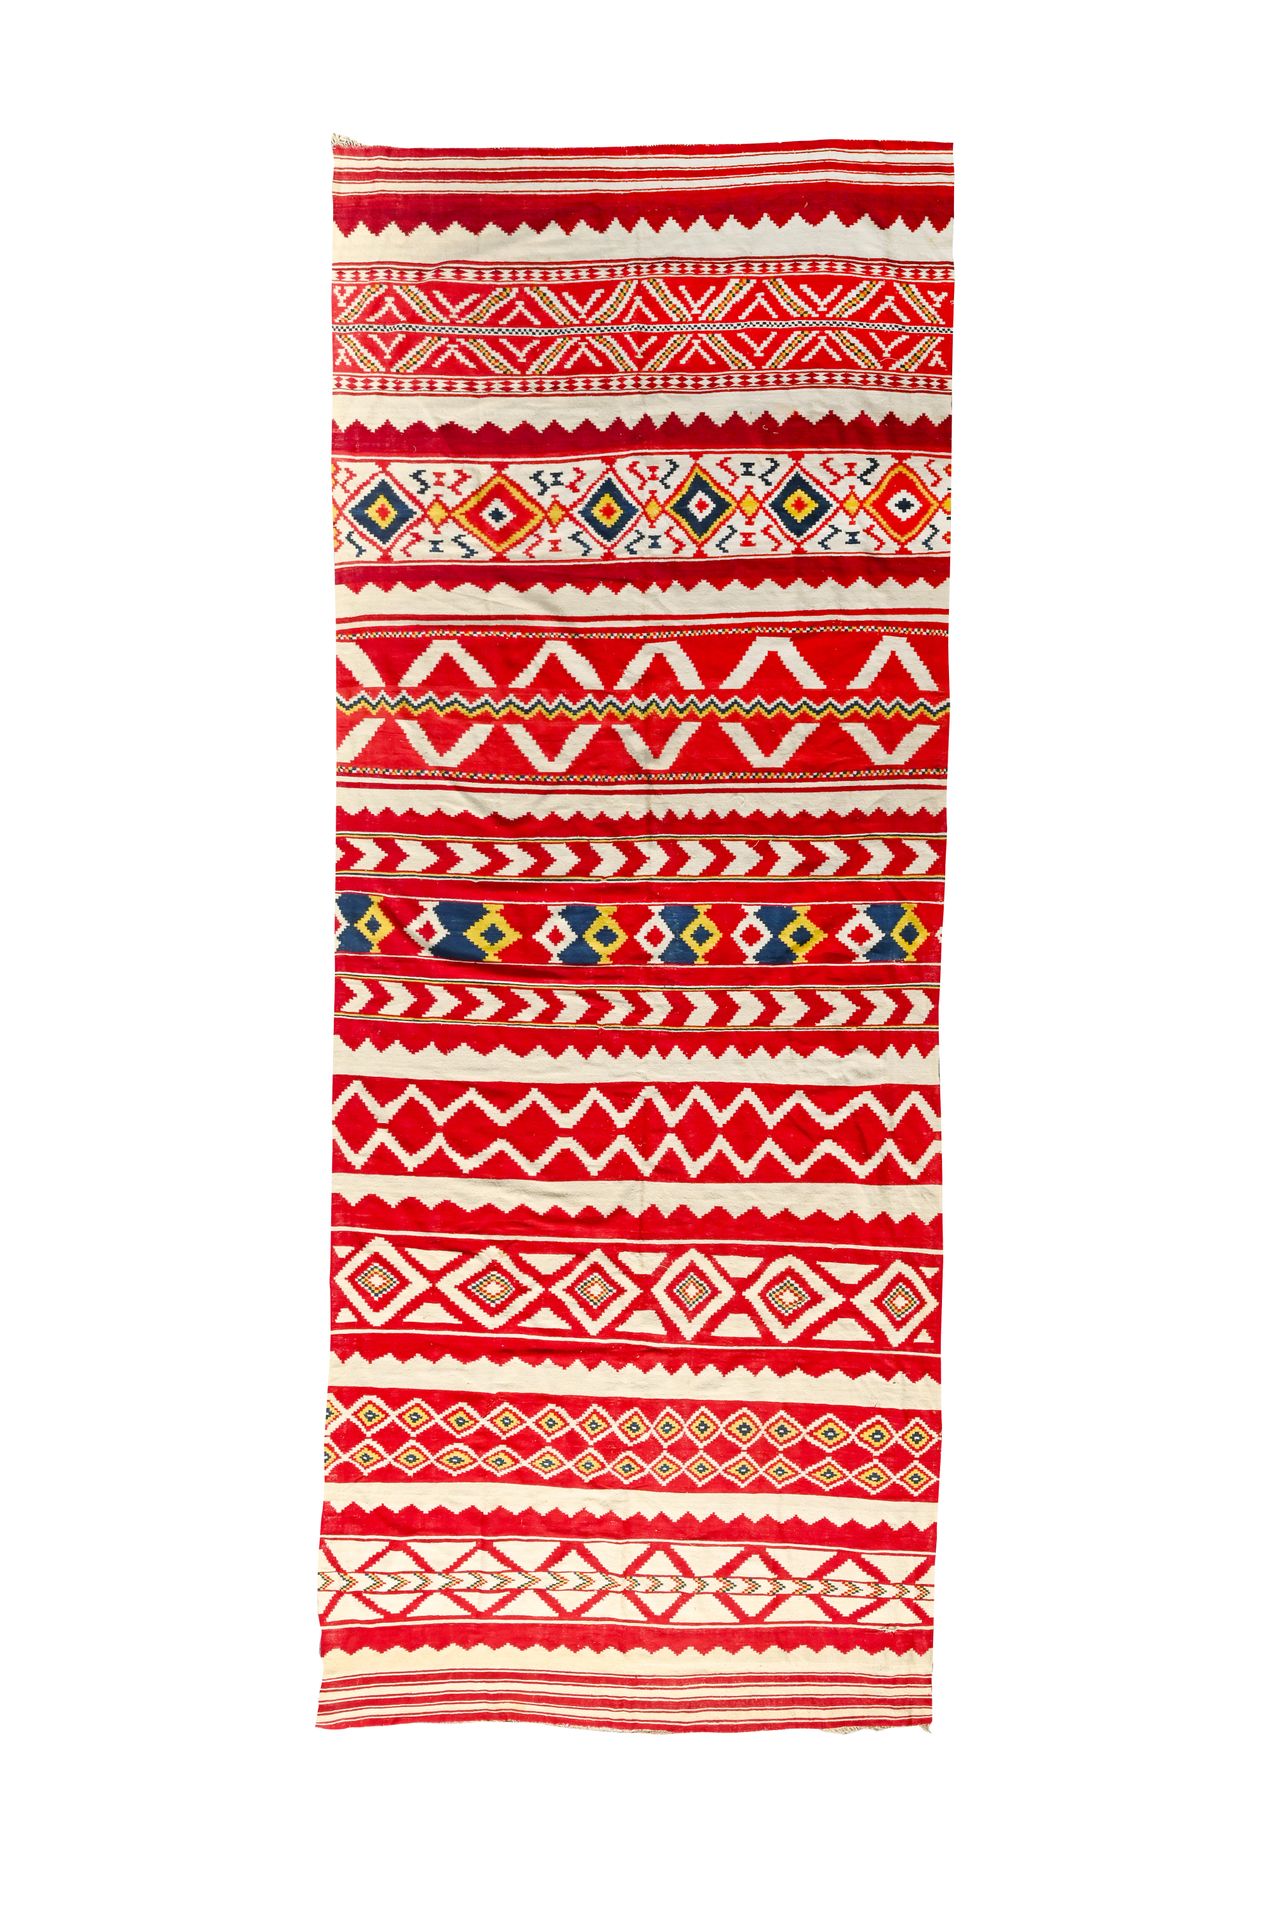 GRANDE TENTURE 羊毛制成的，有红白相间的格子和黄色菱形。

l.450厘米 - 长173厘米

磨损的